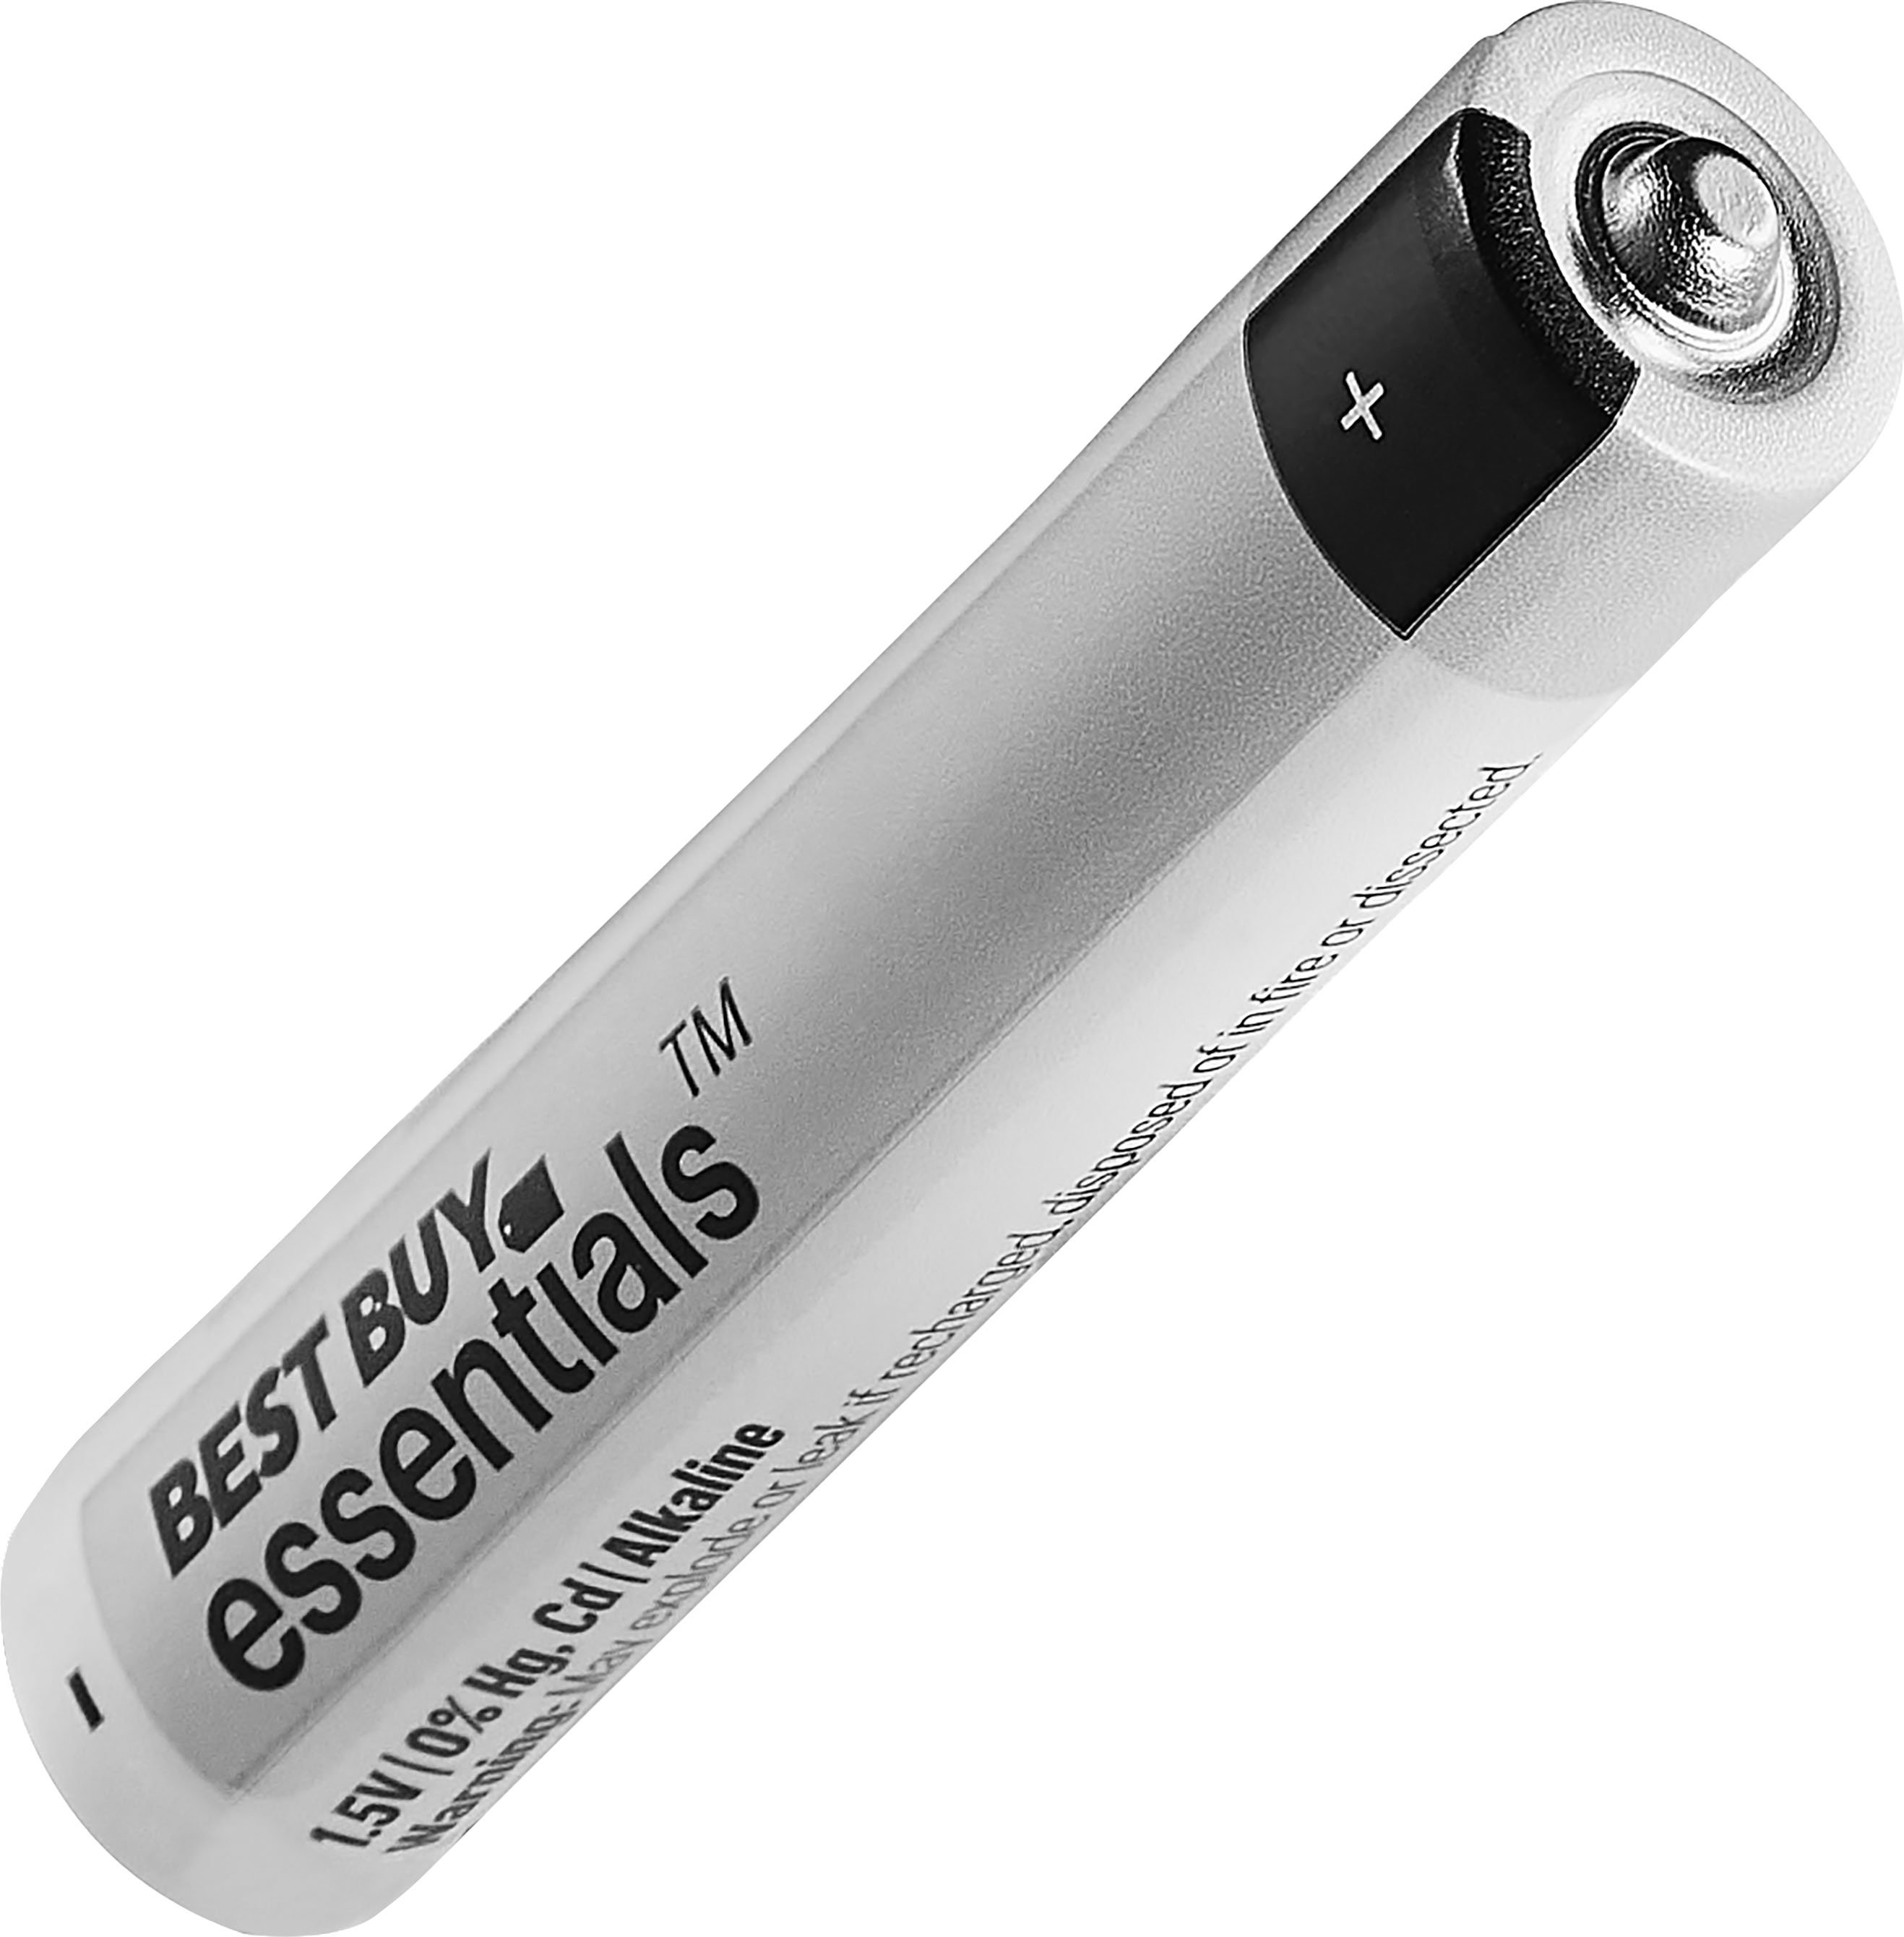 Best Buy essentials™ - AAAA Batteries (12-Pack)